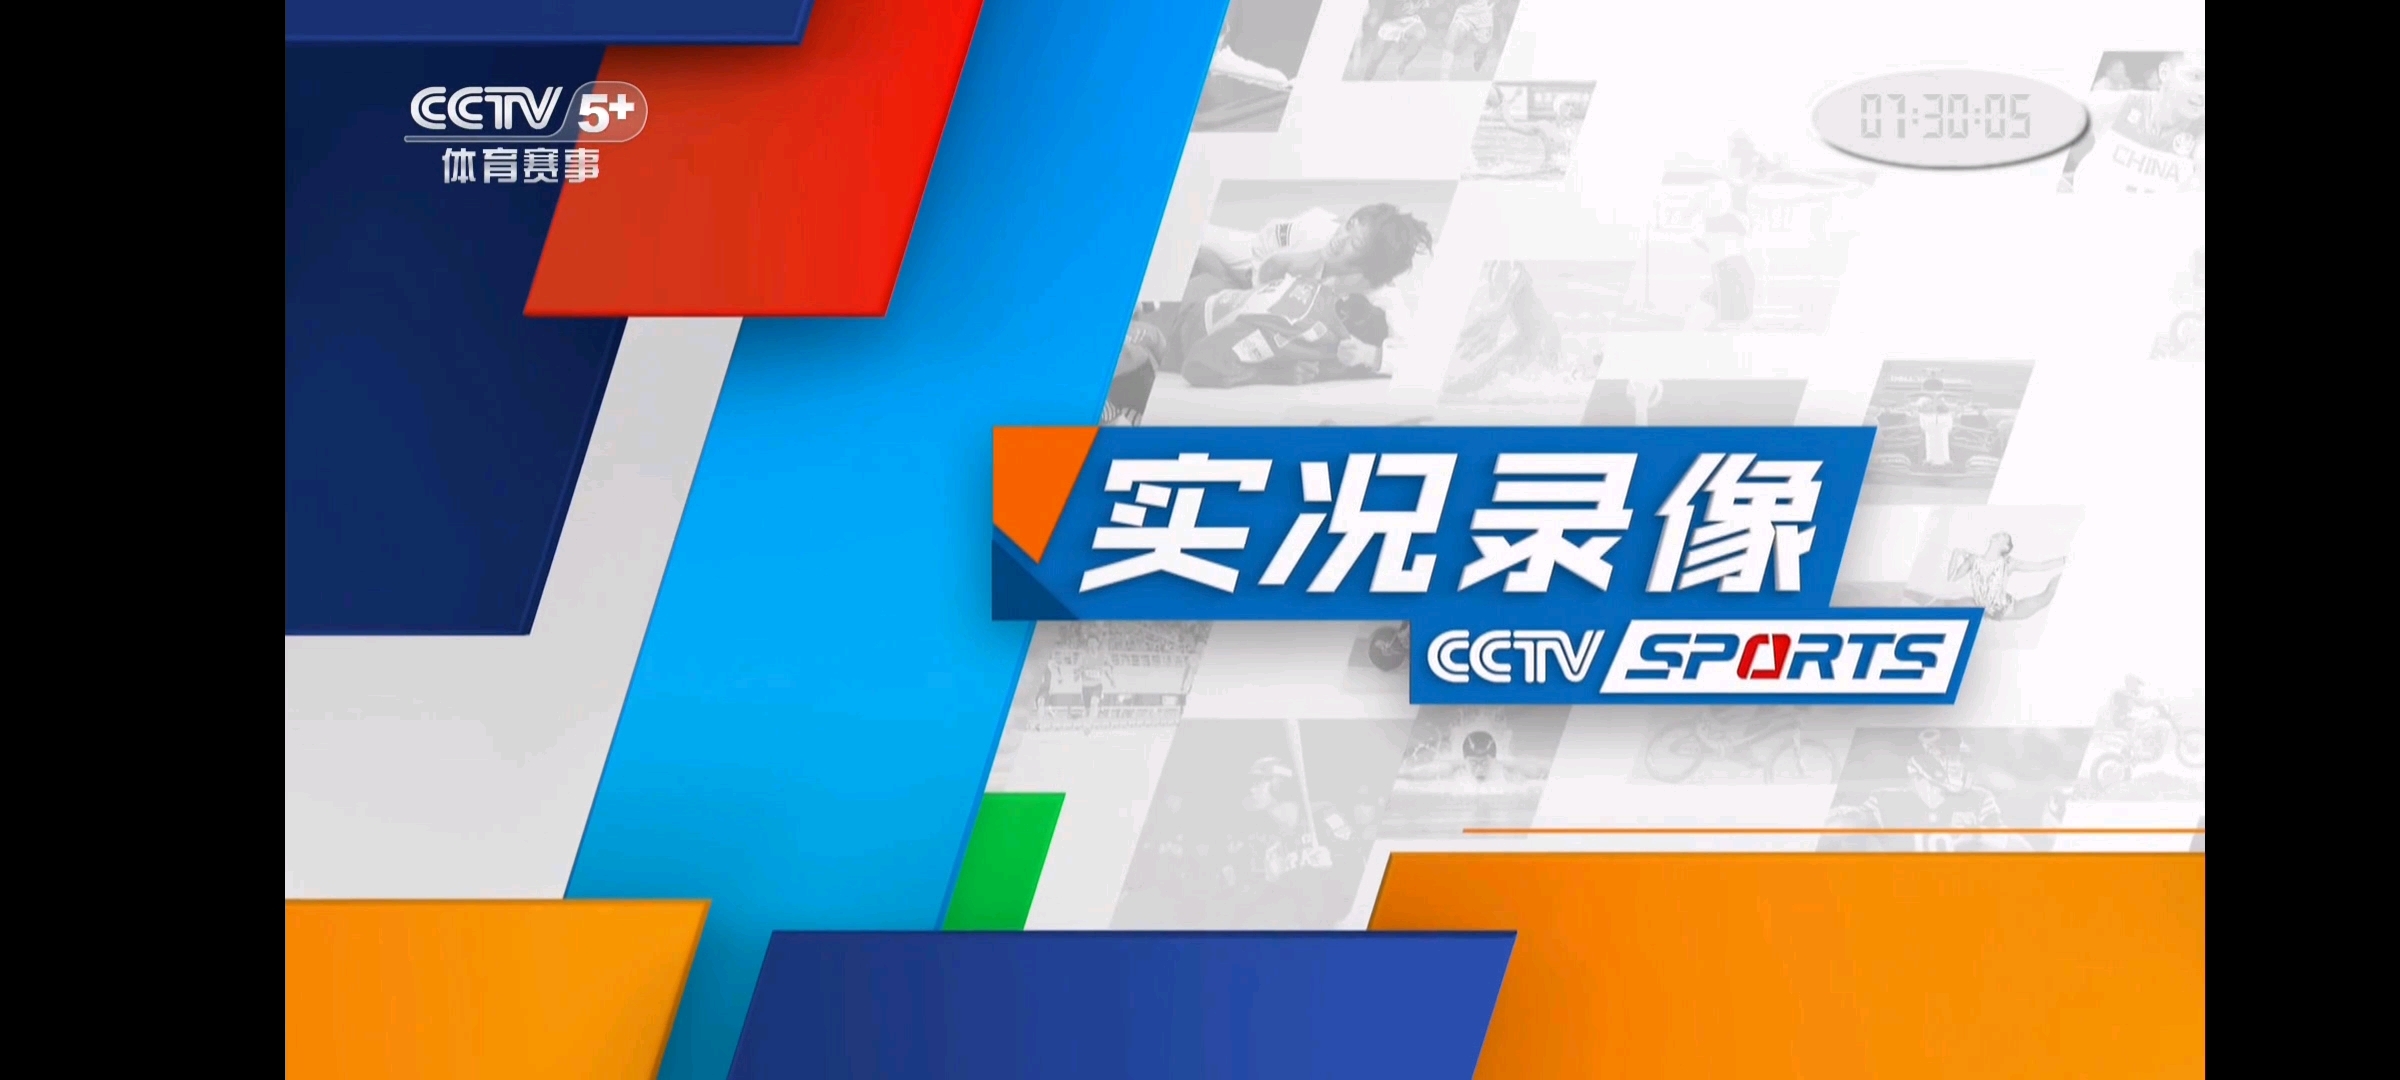 cctv5体育频道 电视台图片